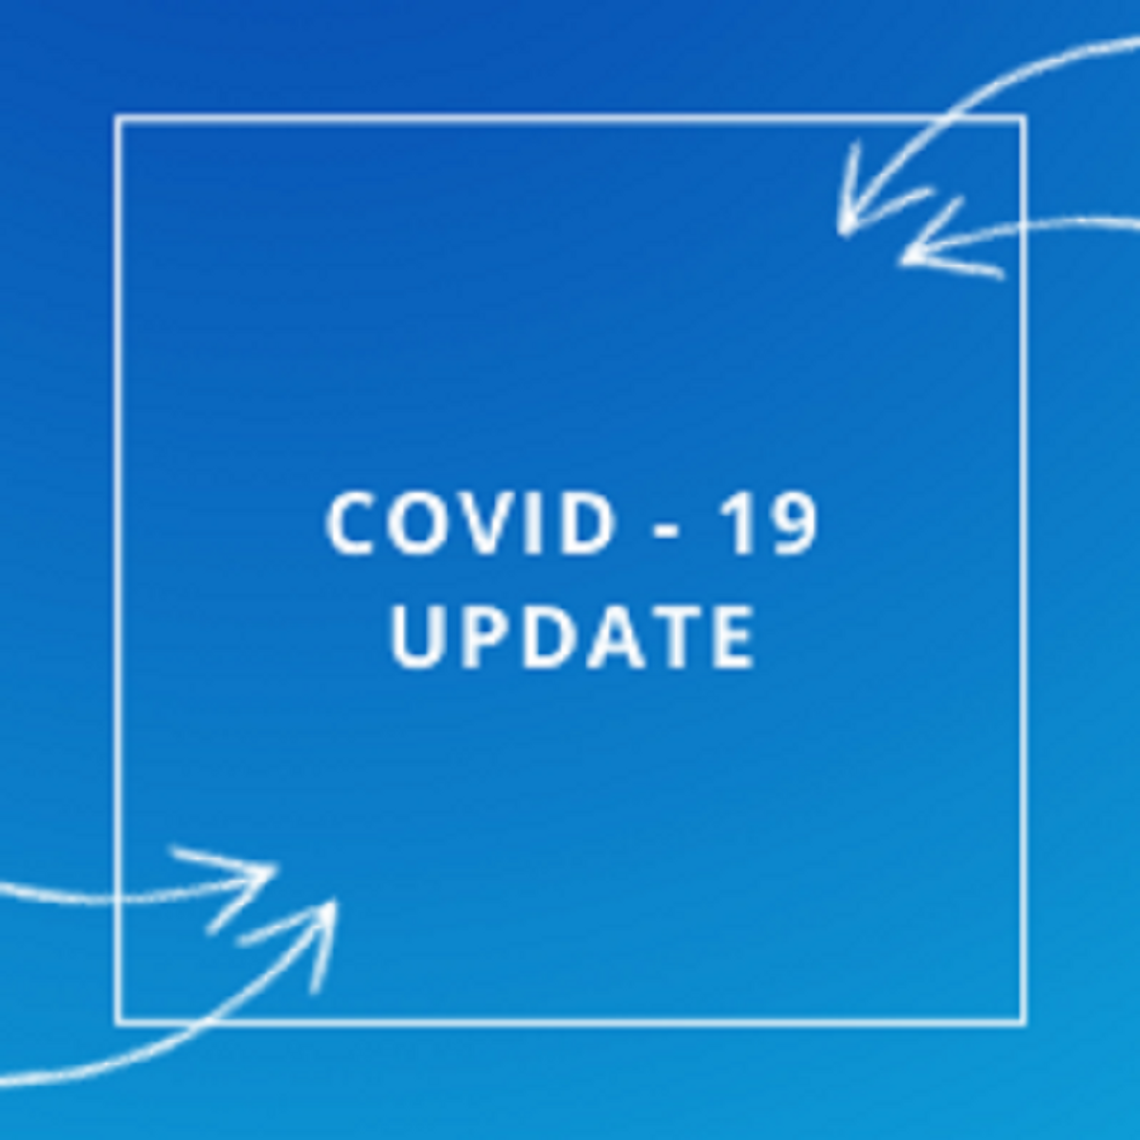 Latest County Information Regarding COVID